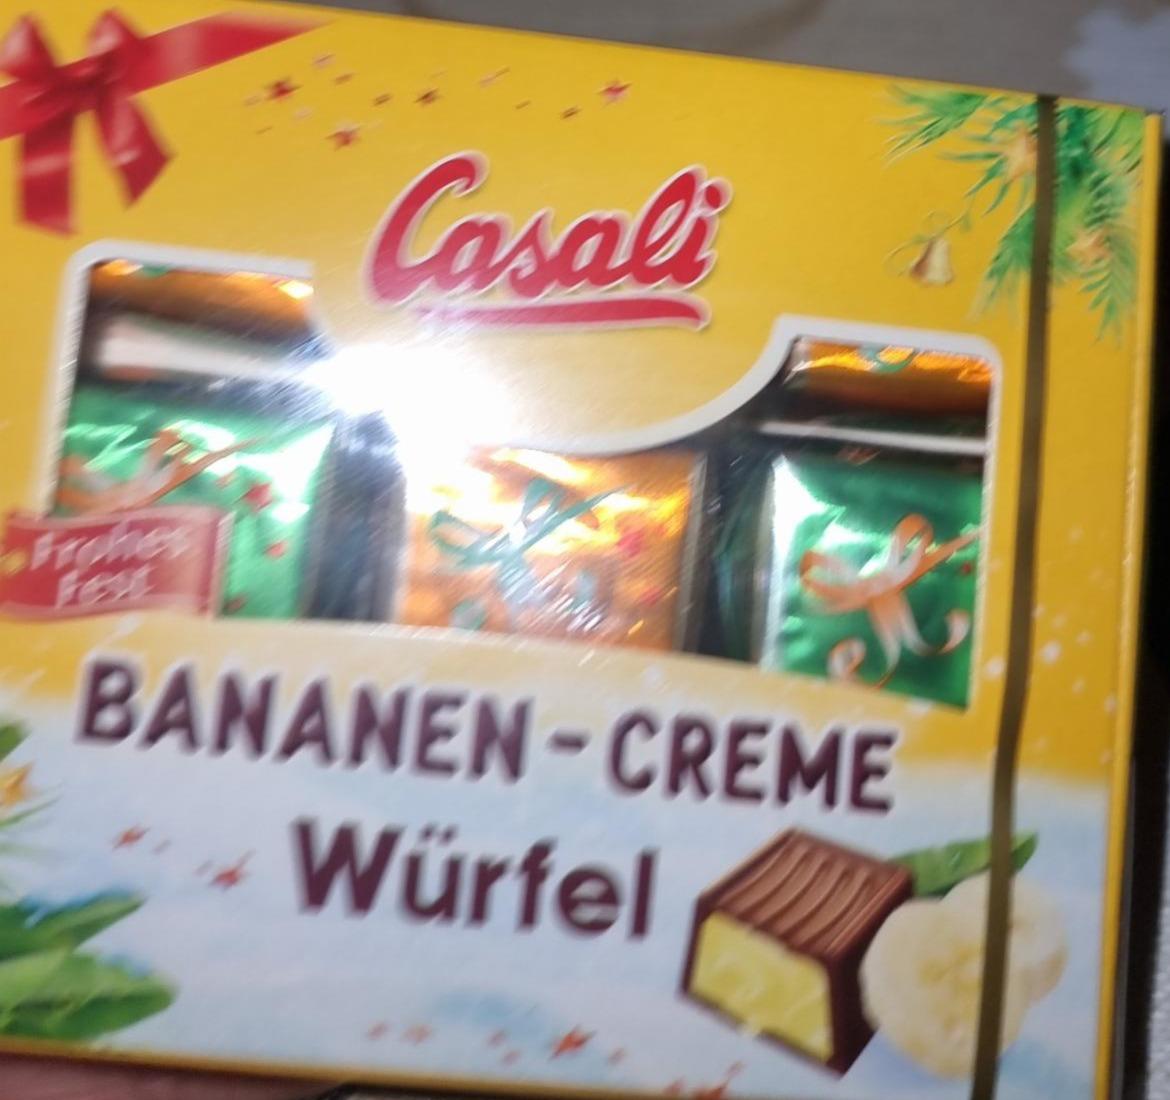 Fotografie - Bananen - creme würfel Casali